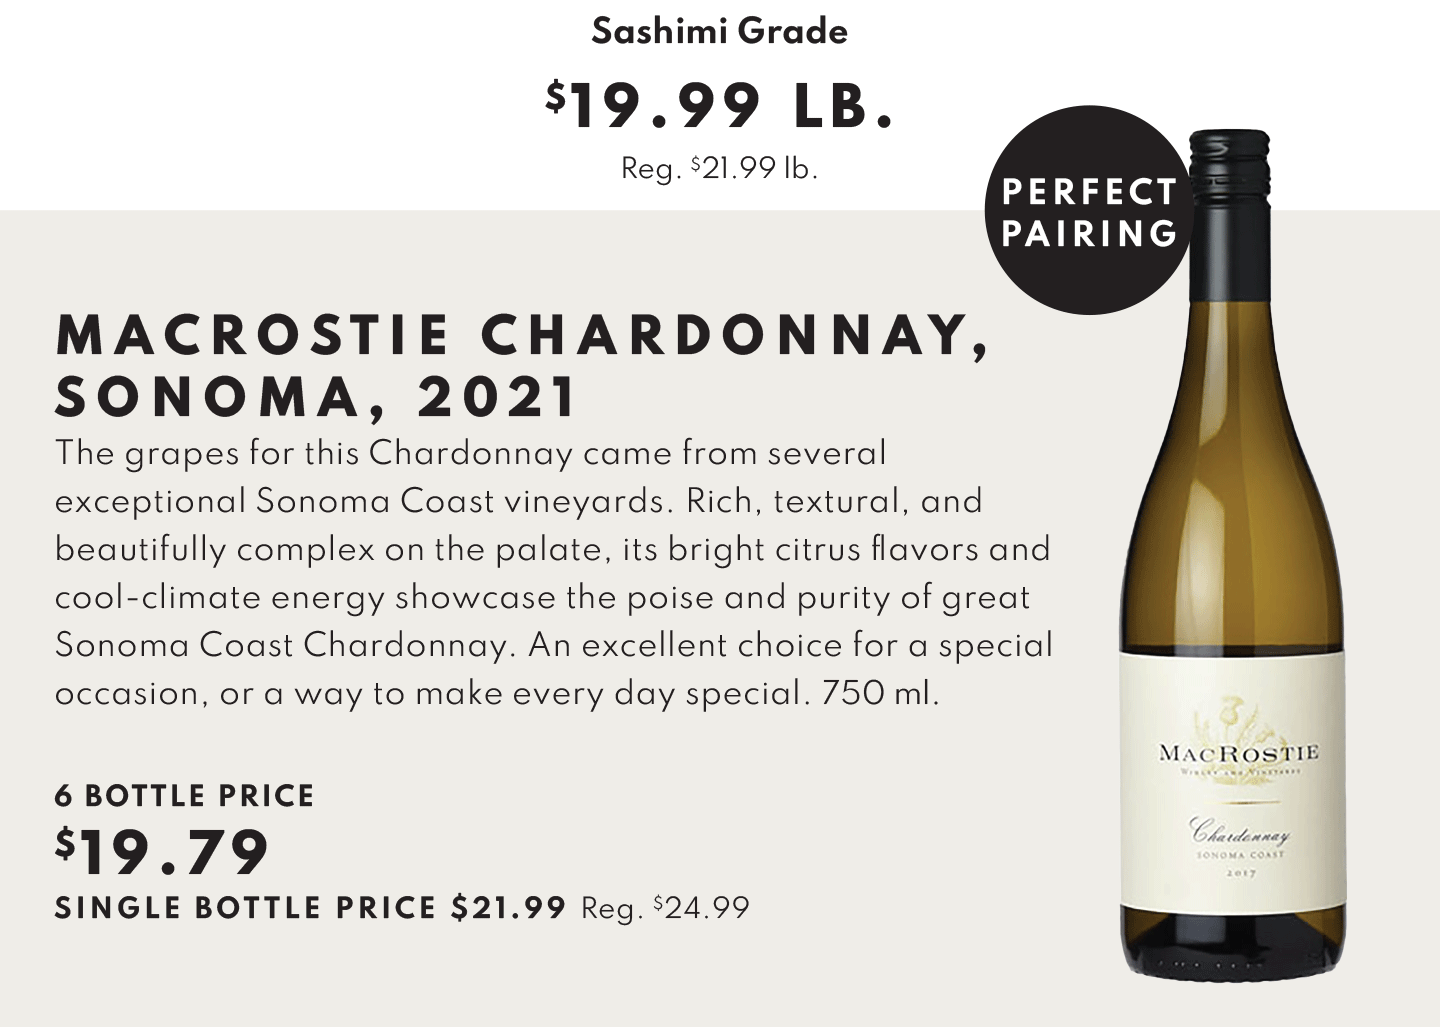 Macrostie Chardonnay, Sonoma, 2021 $19.79 6 bottle price